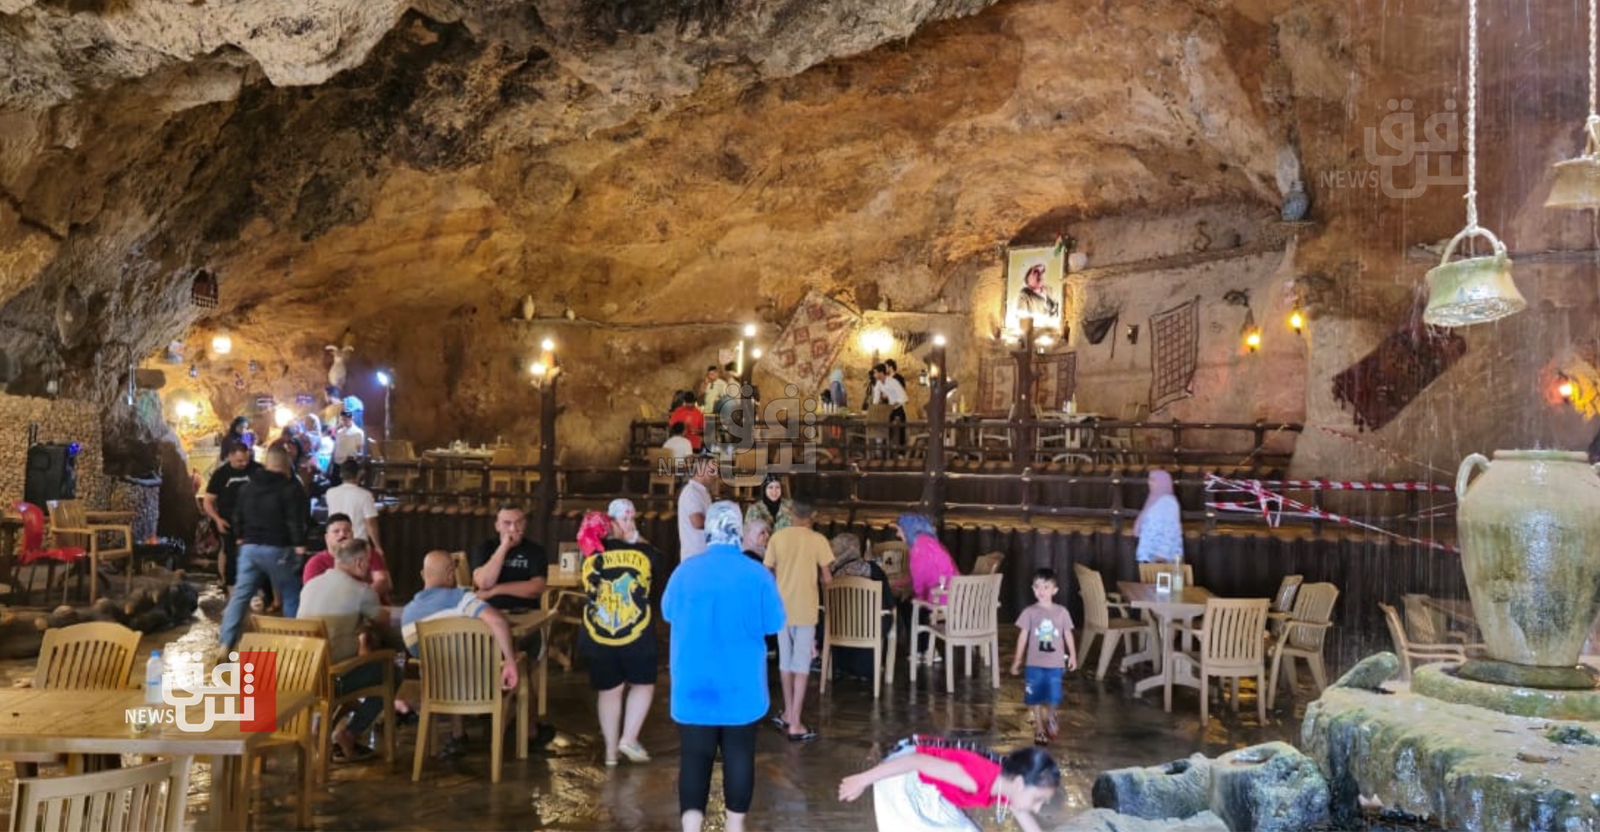 Inshki Grotto: a transformation from sanctuary, to hospital, to tourist hub